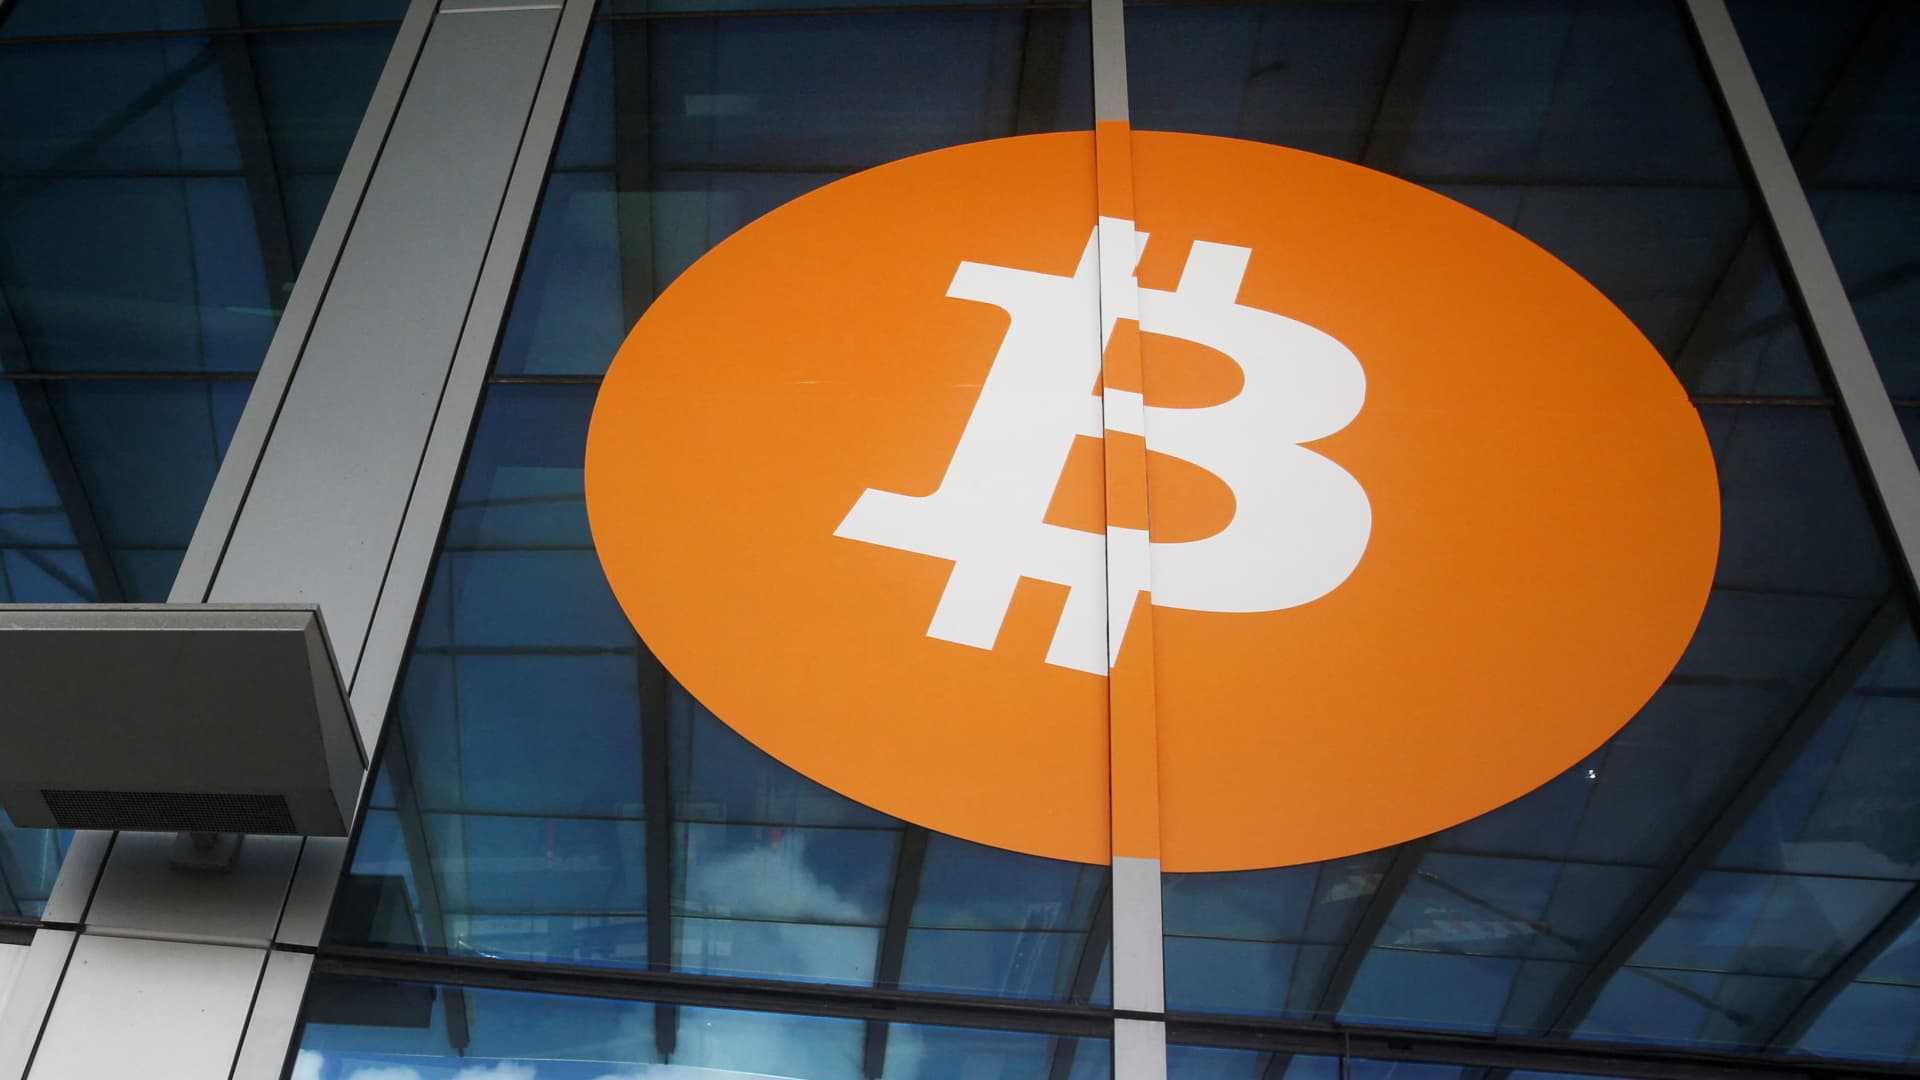 A bitcoin logo is seen at the entrance of the Miami Beach Convention Center during the Bitcoin Conference 2022 in Miami Beach, Florida, April 6, 2022.